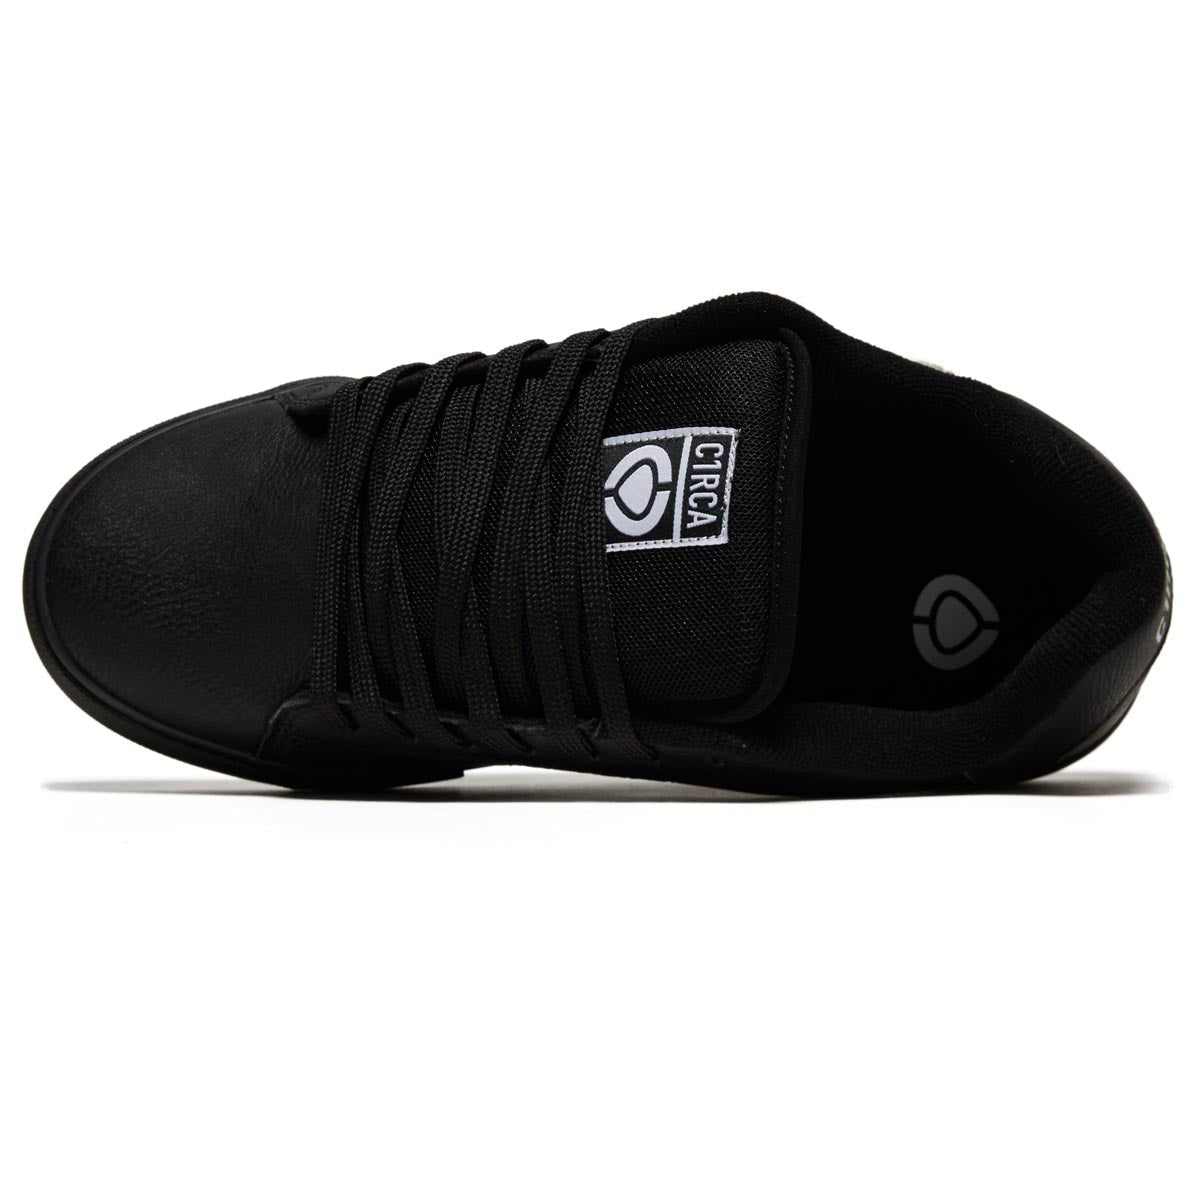 C1rca 211 Vulc Bold Shoes - Black/White image 3